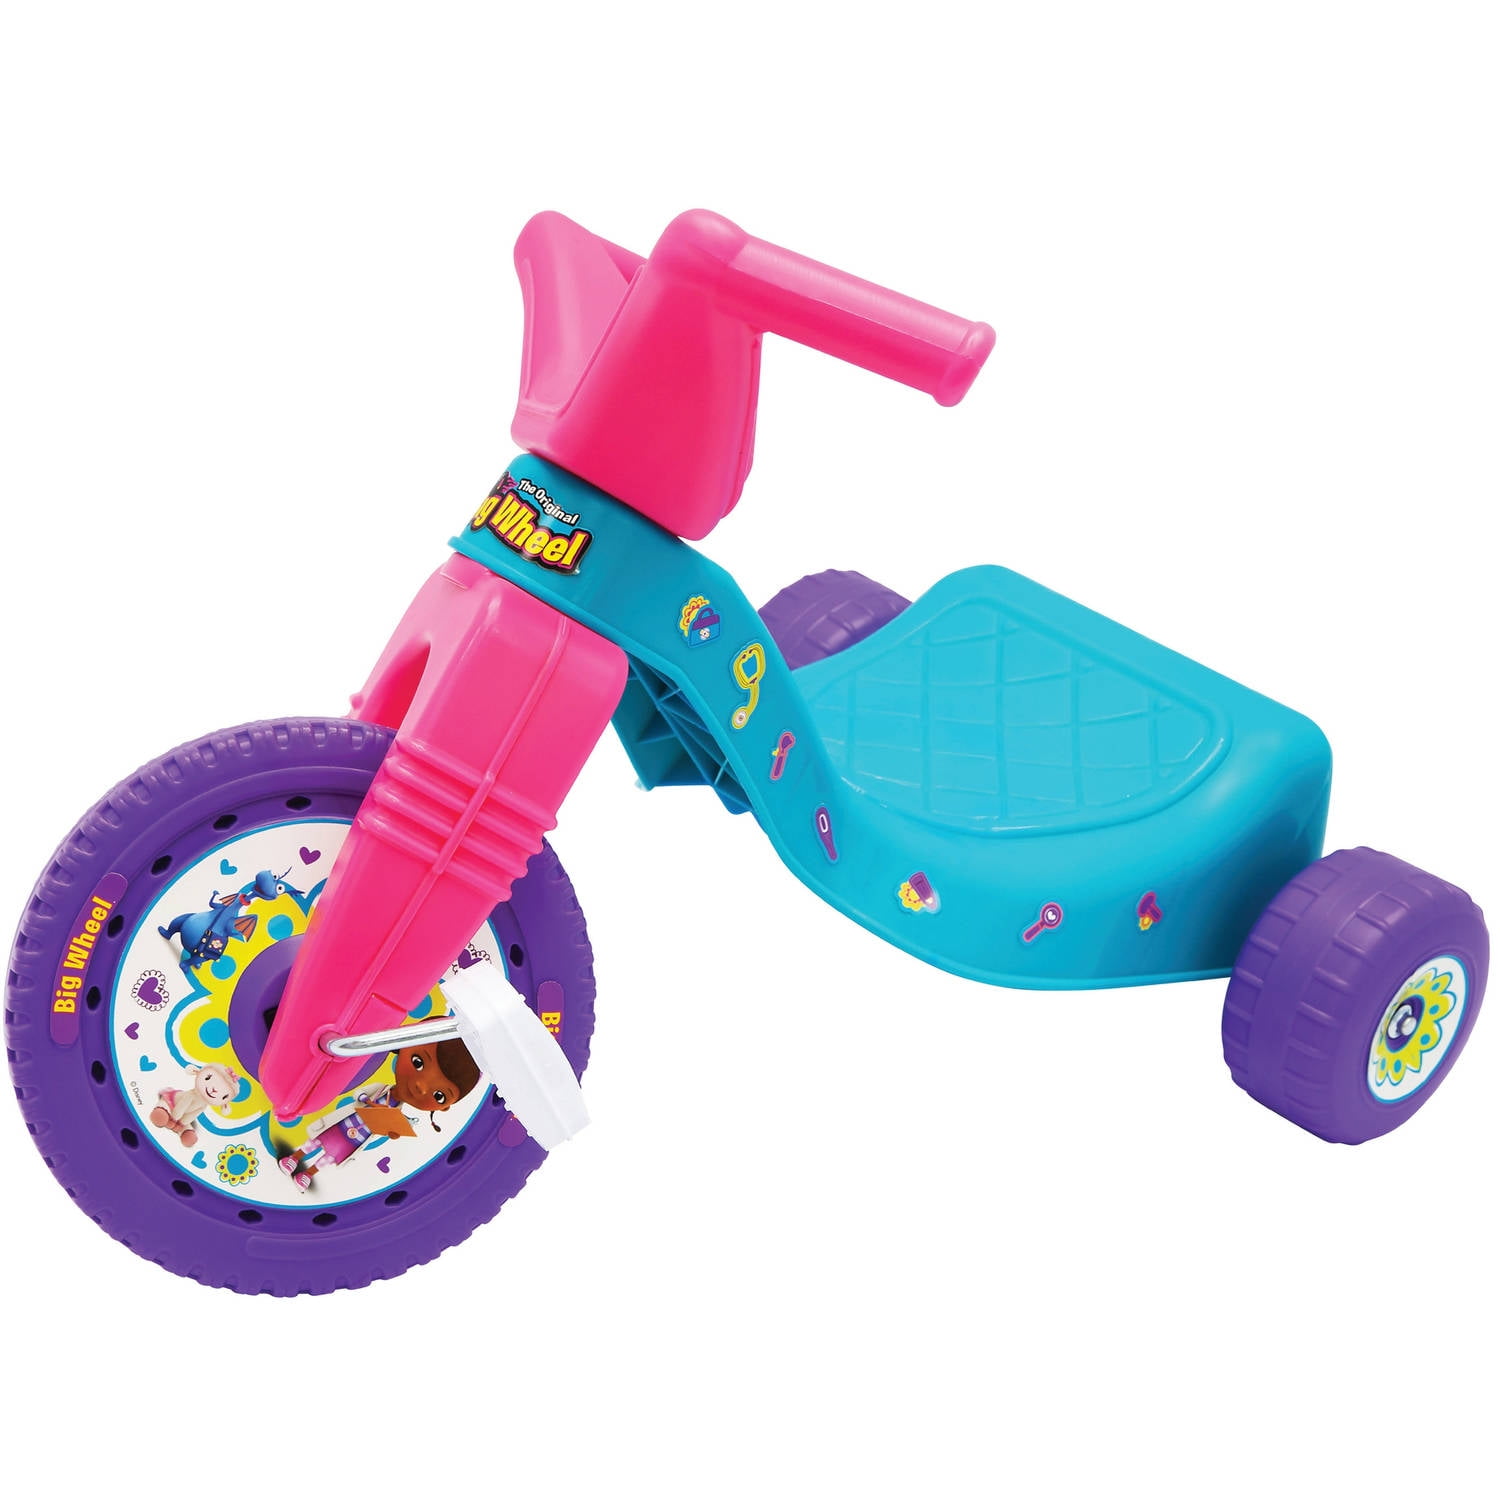 big wheel bike for girls